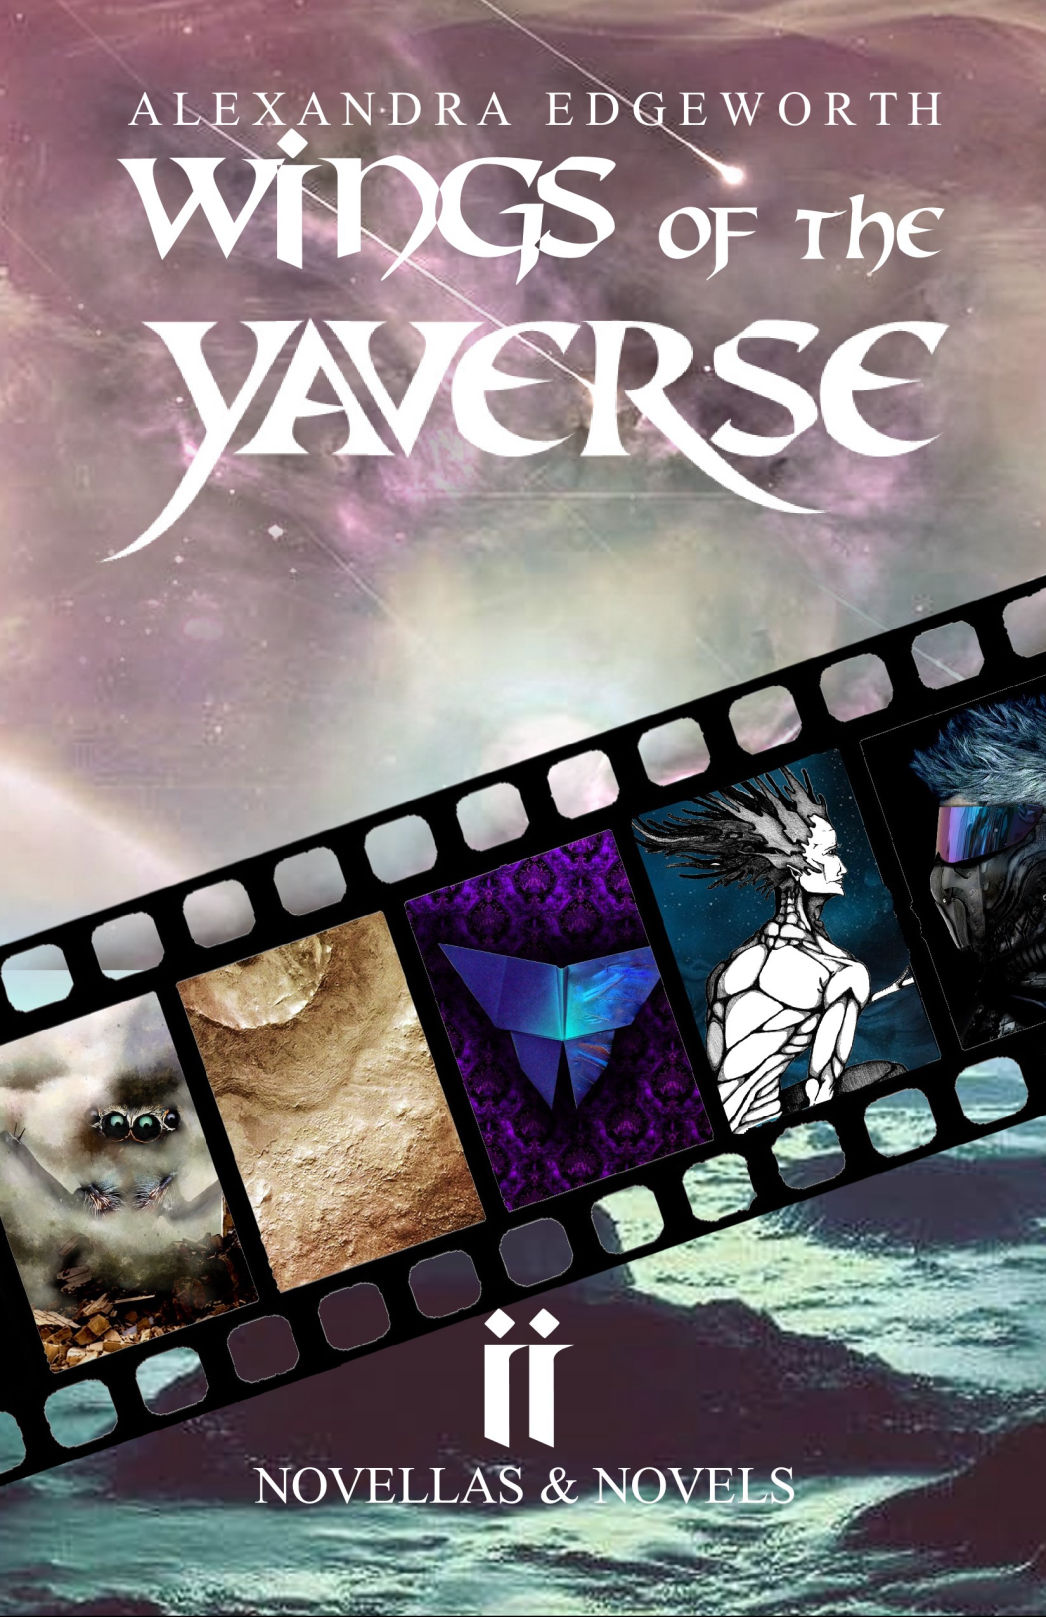 www.yaverse.com